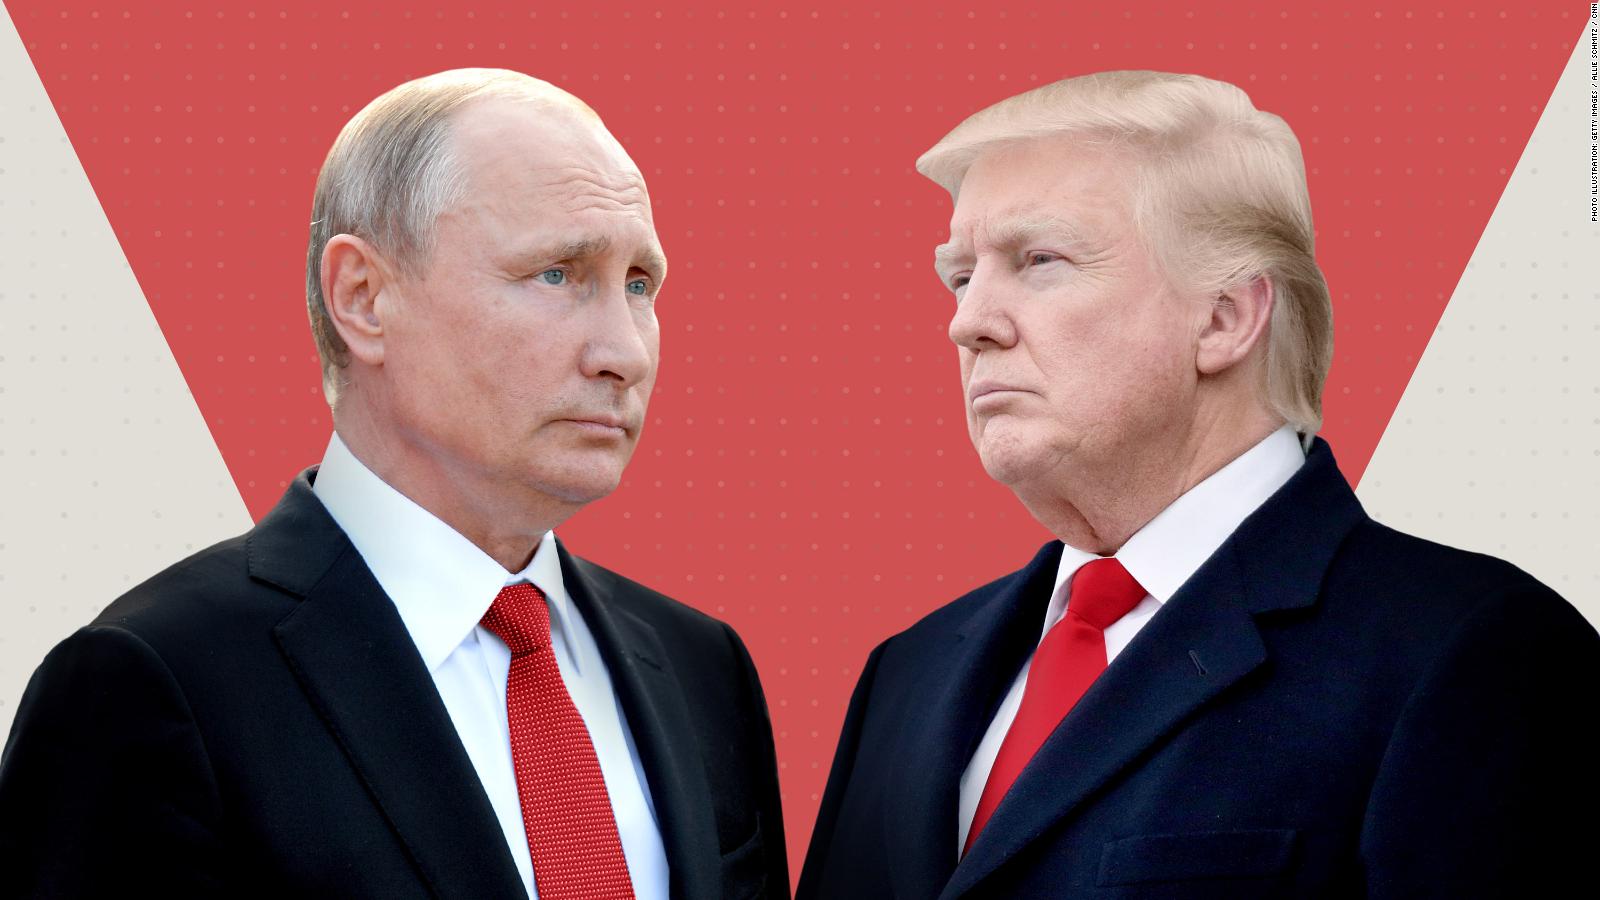 Putin aide: Putin-Trump summit is happening - CNN Video